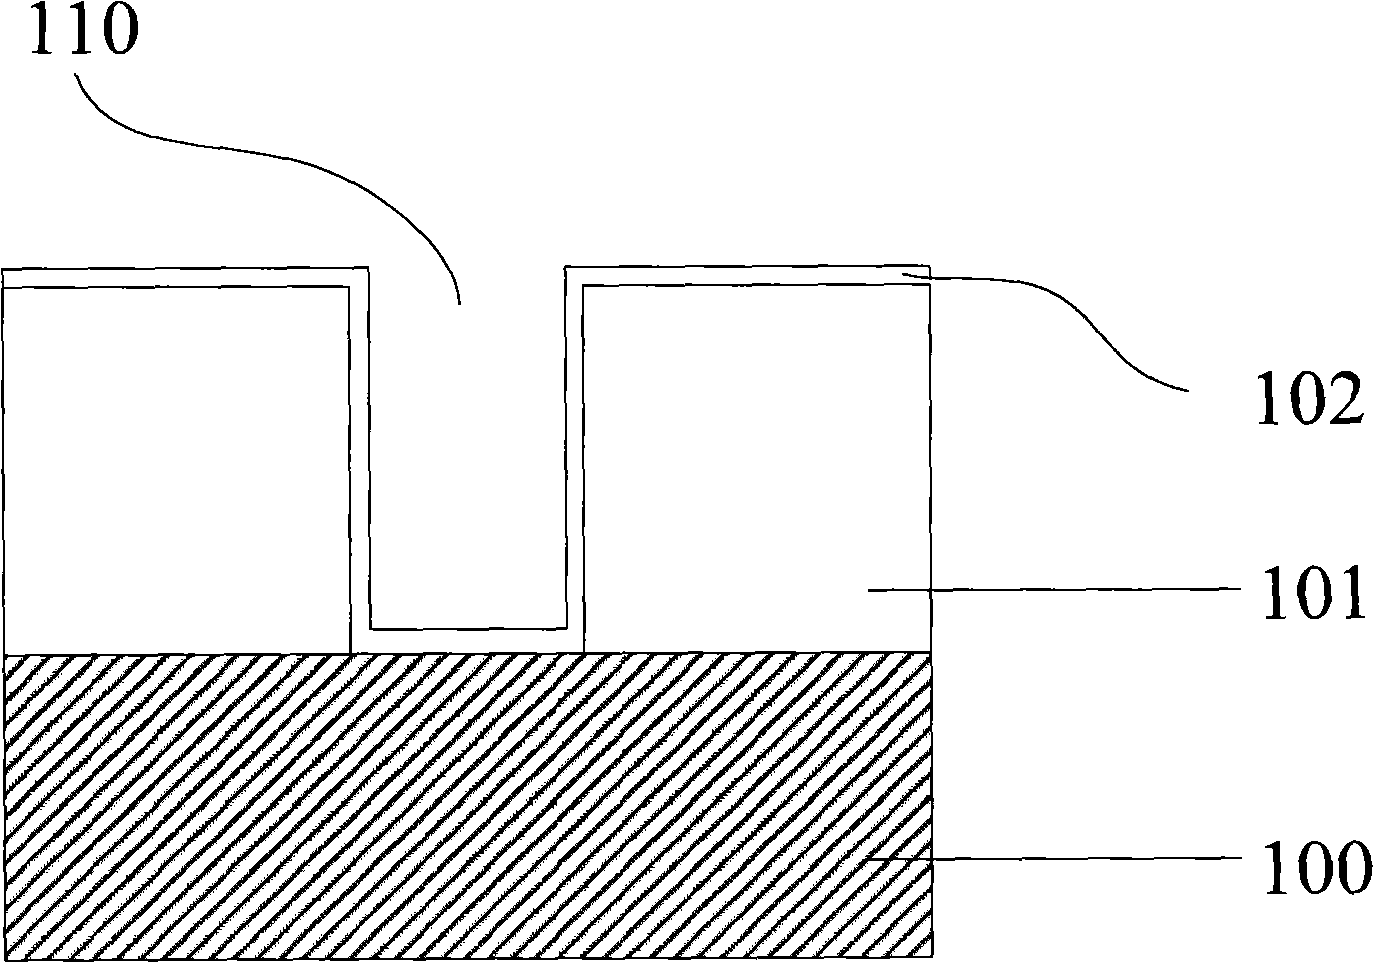 Method for manufacturing tungsten plunger